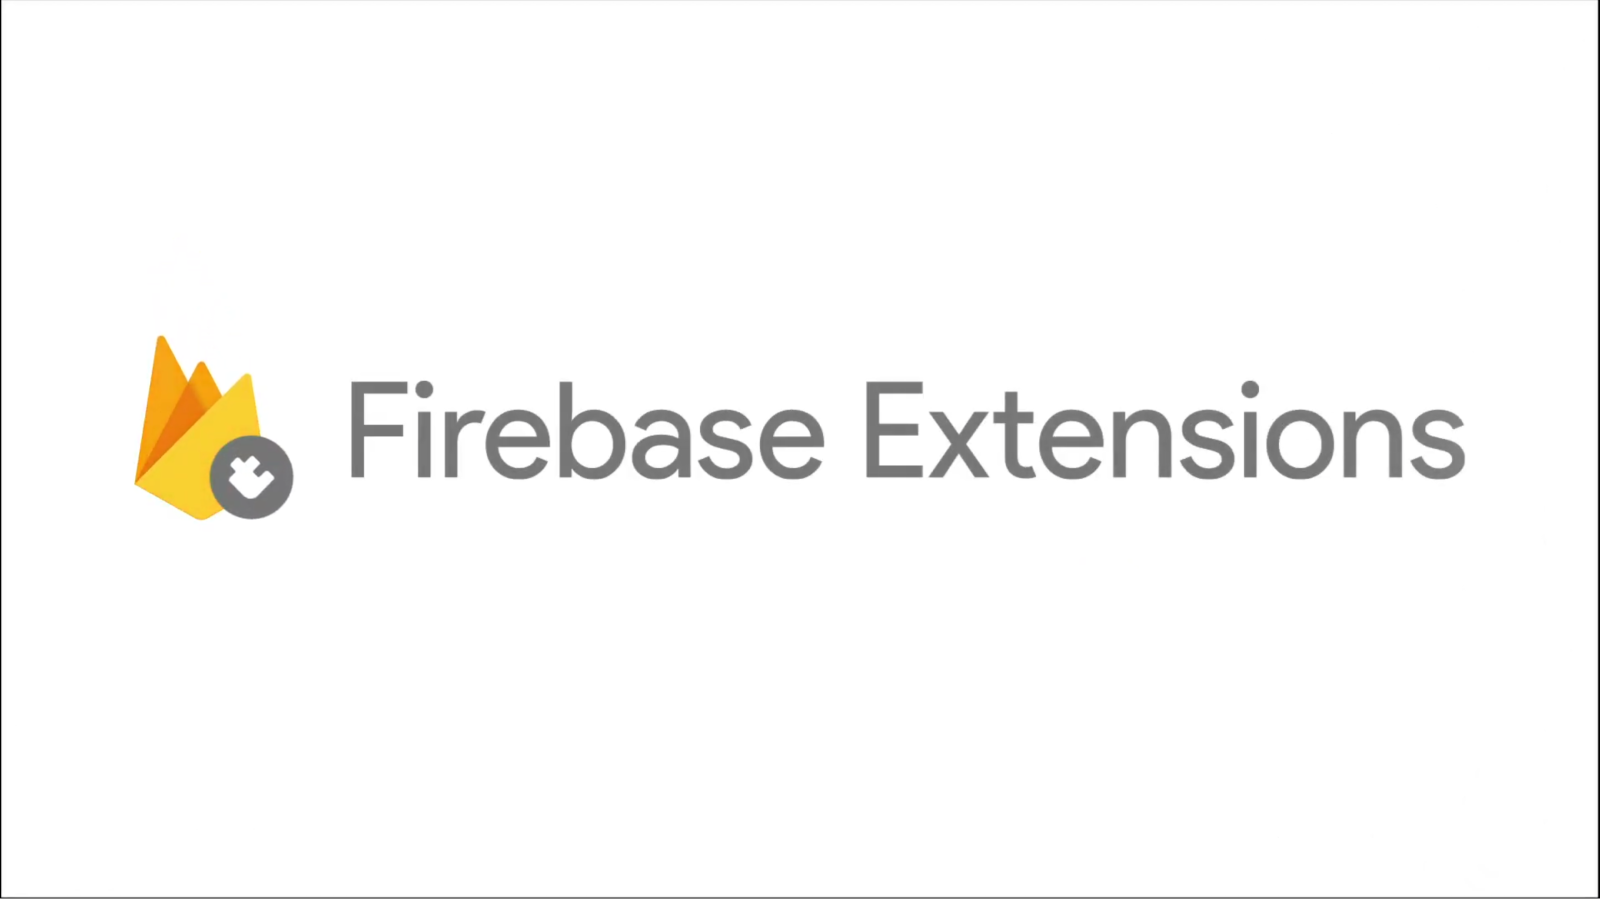 Firebase Extensions